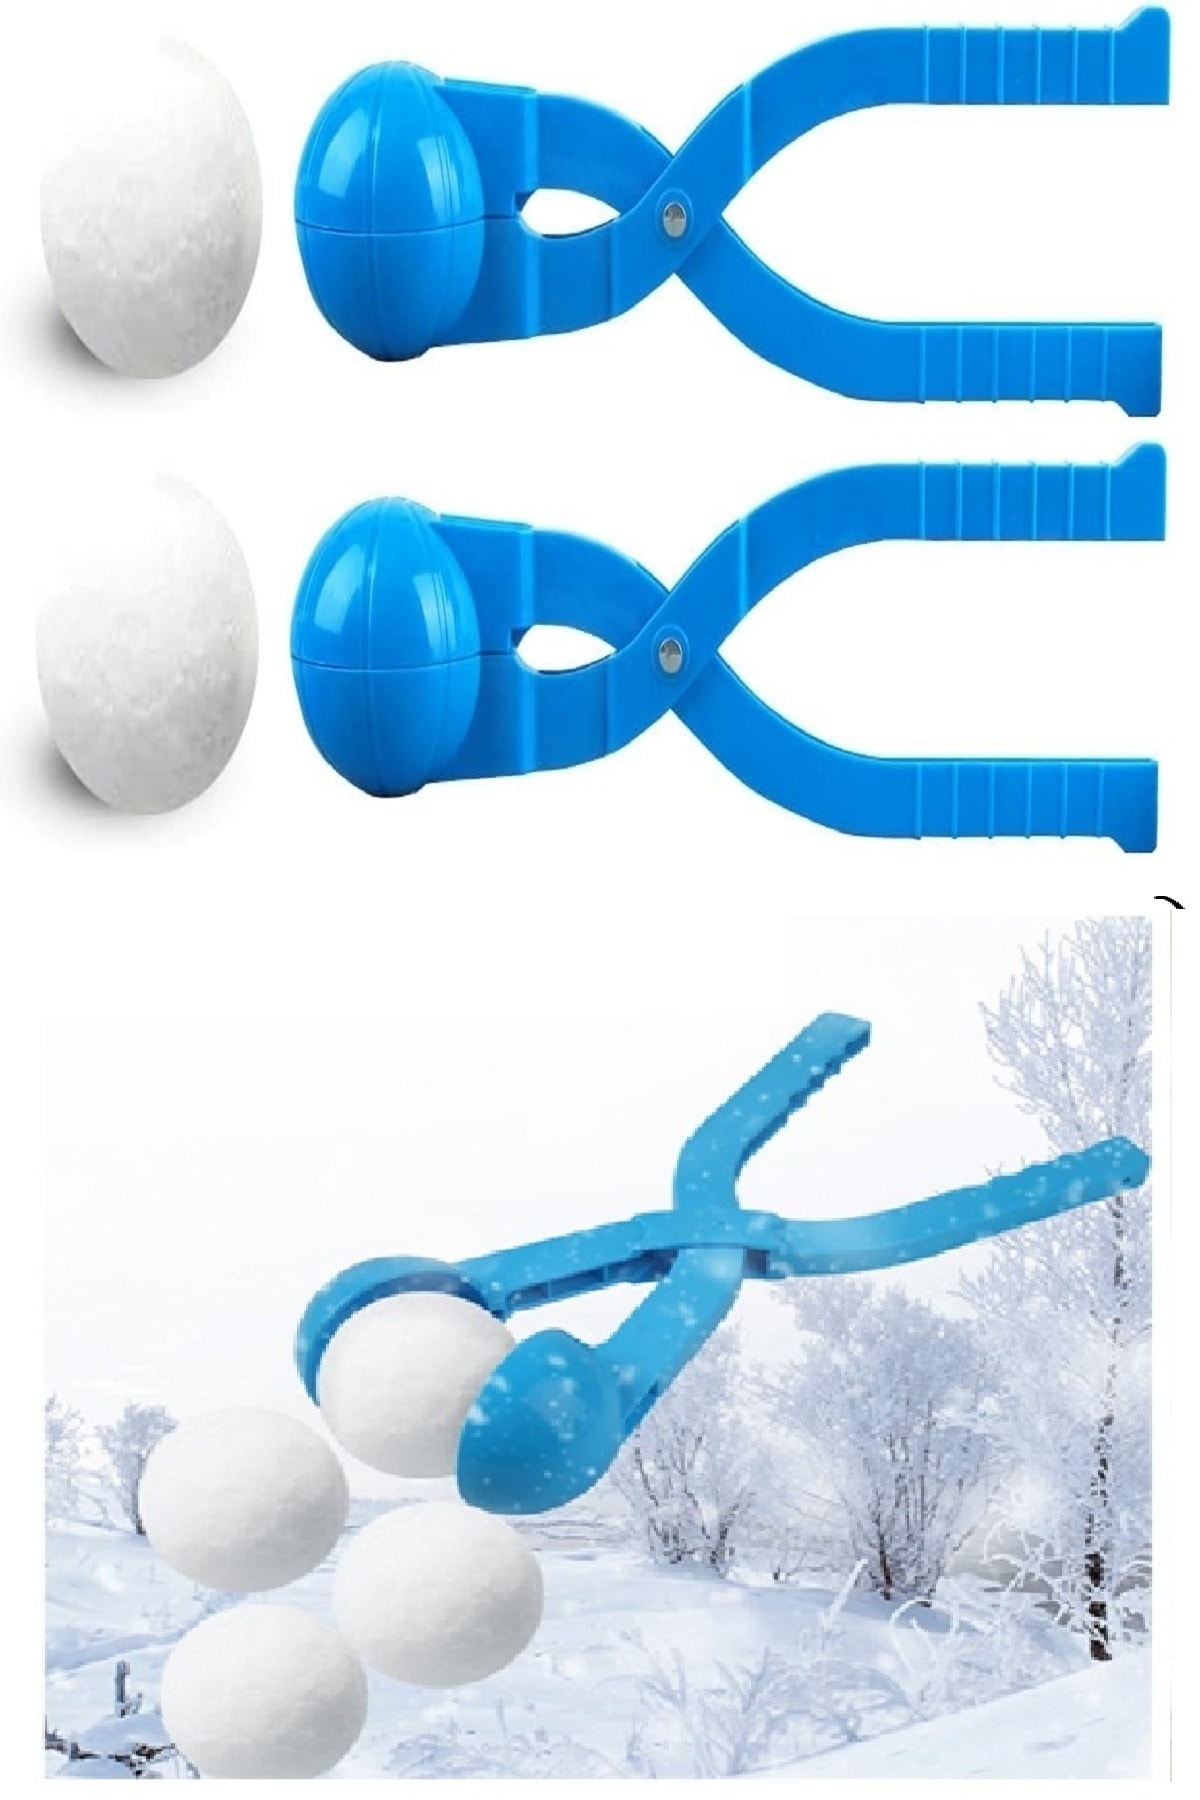 DEEMBRO 2 Adet Kartopu Yapma Aleti Kartopu Makinesi Kartopu Yapıcı Kar Topu Oyuncağı Kar Topu Oyunu